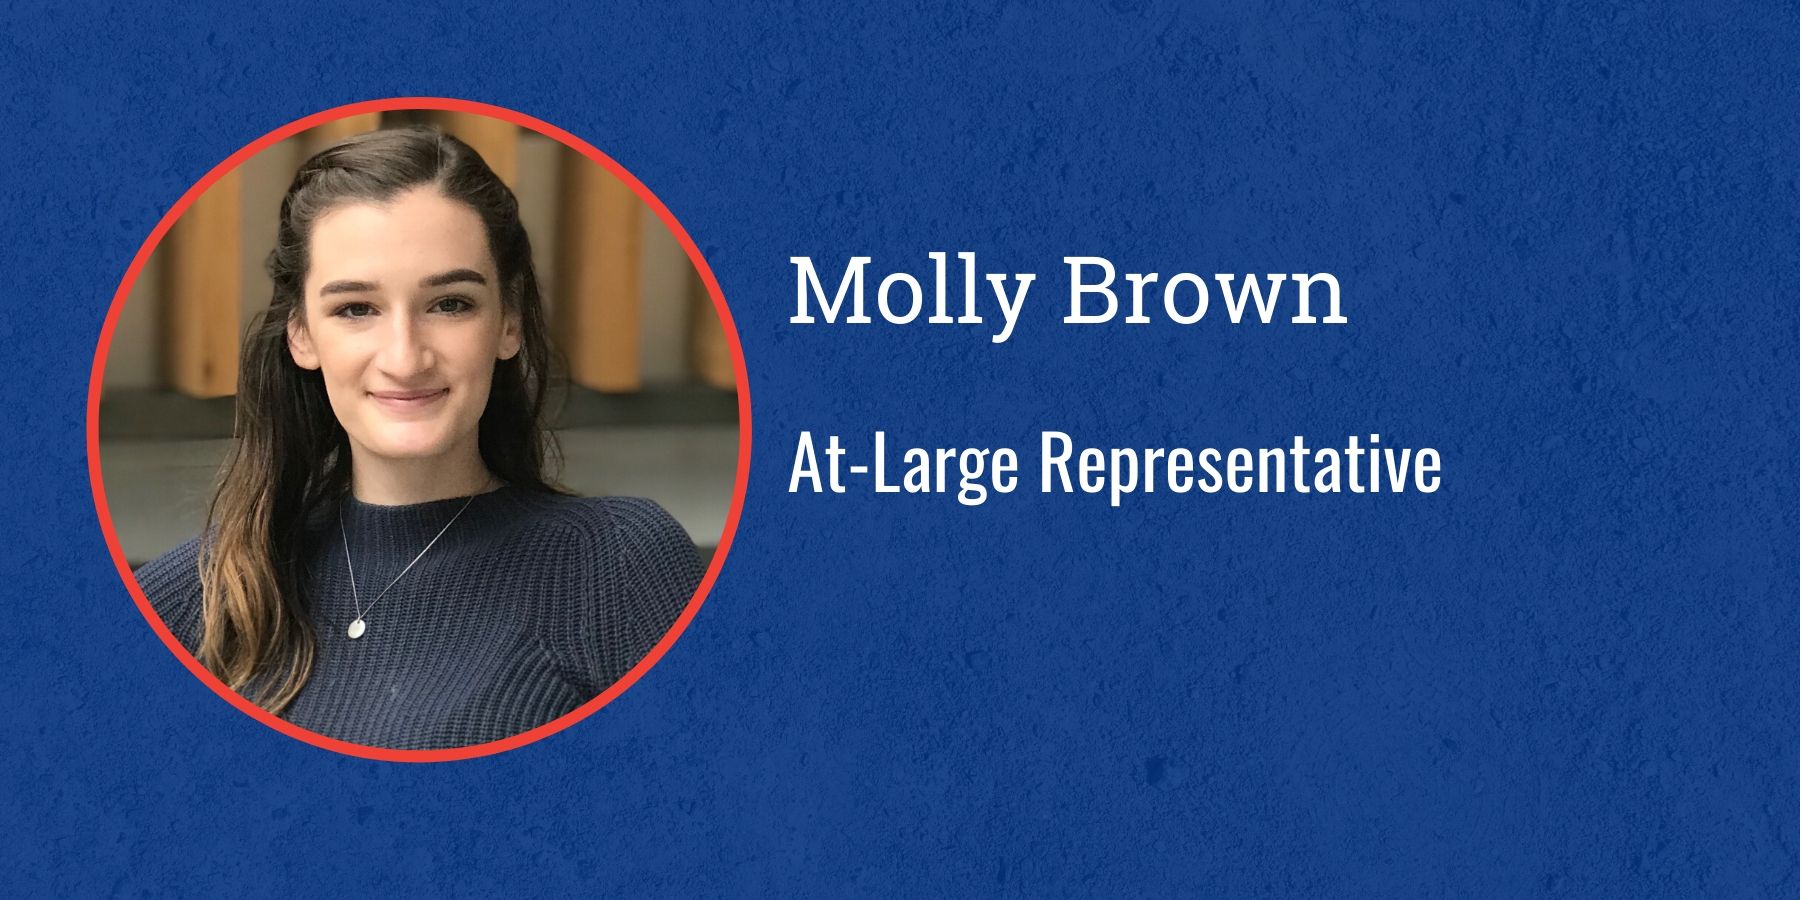 Photo of Molly Brown and text At-Large Representative